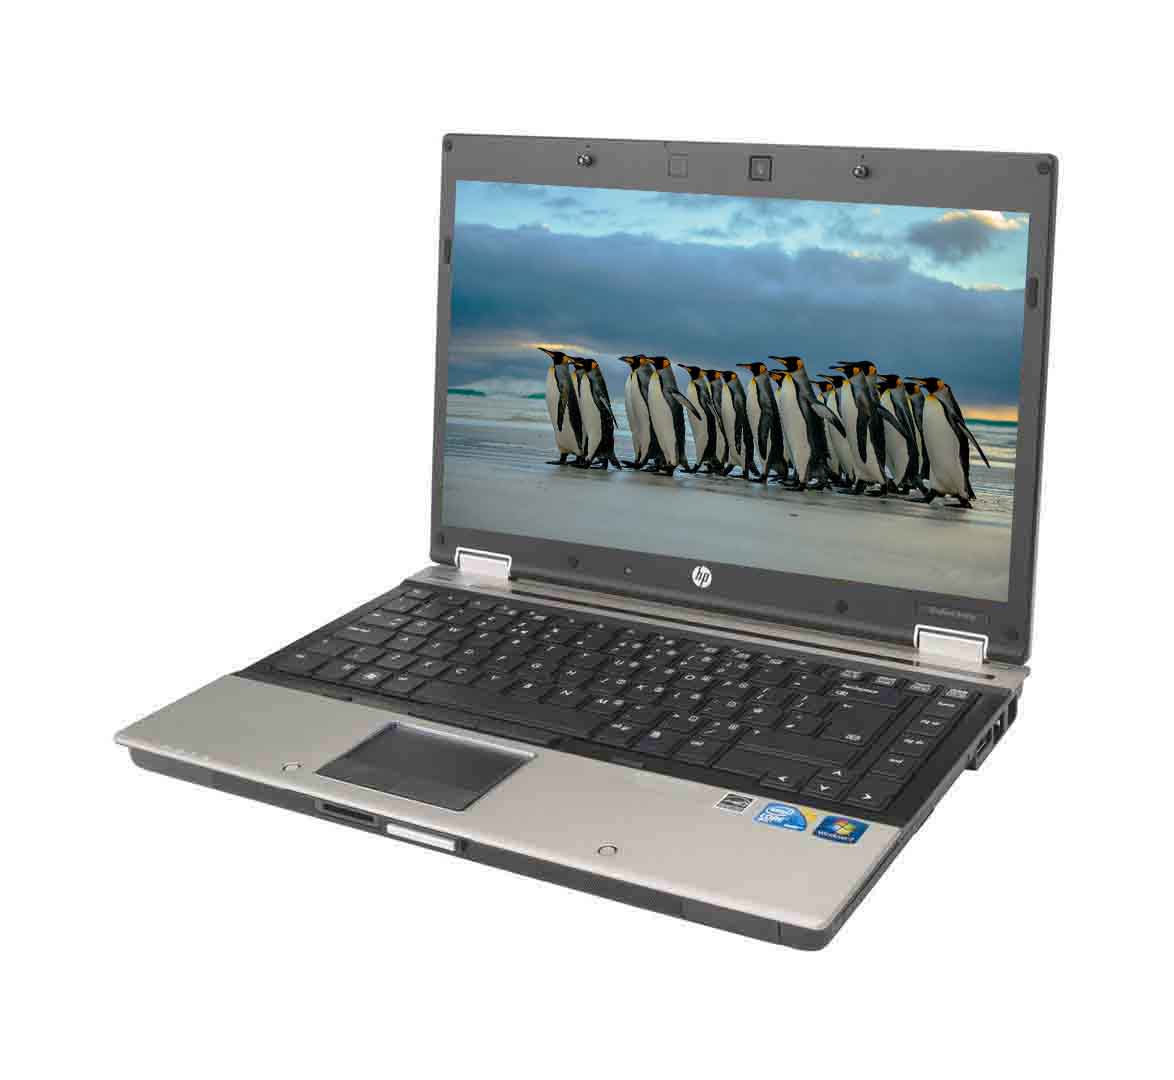 HP EliteBook 8440p, Intel Core i5-1st Generation CPU, 8GB RAM, 500GB HDD, 14.1 inch Display, Windows 10 Pro, Refurbished Laptop